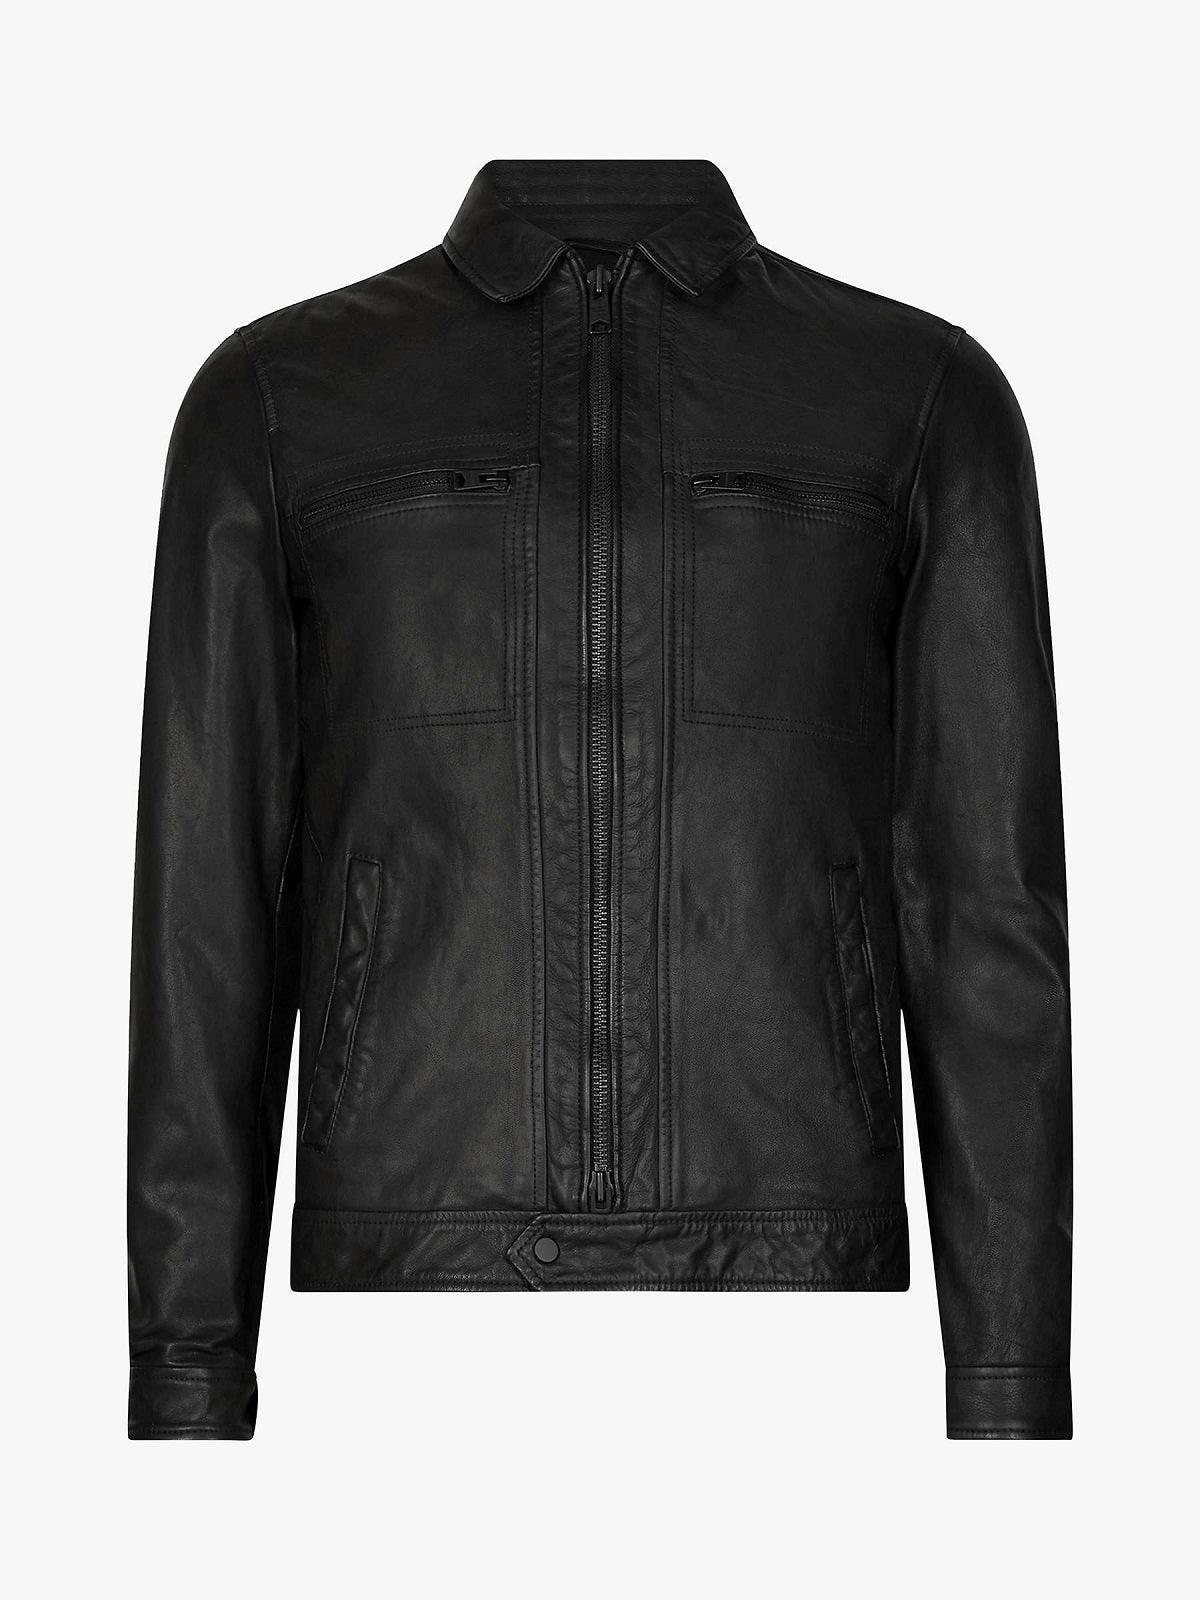 Men Solid Black Leather Jacket - Leather Loom